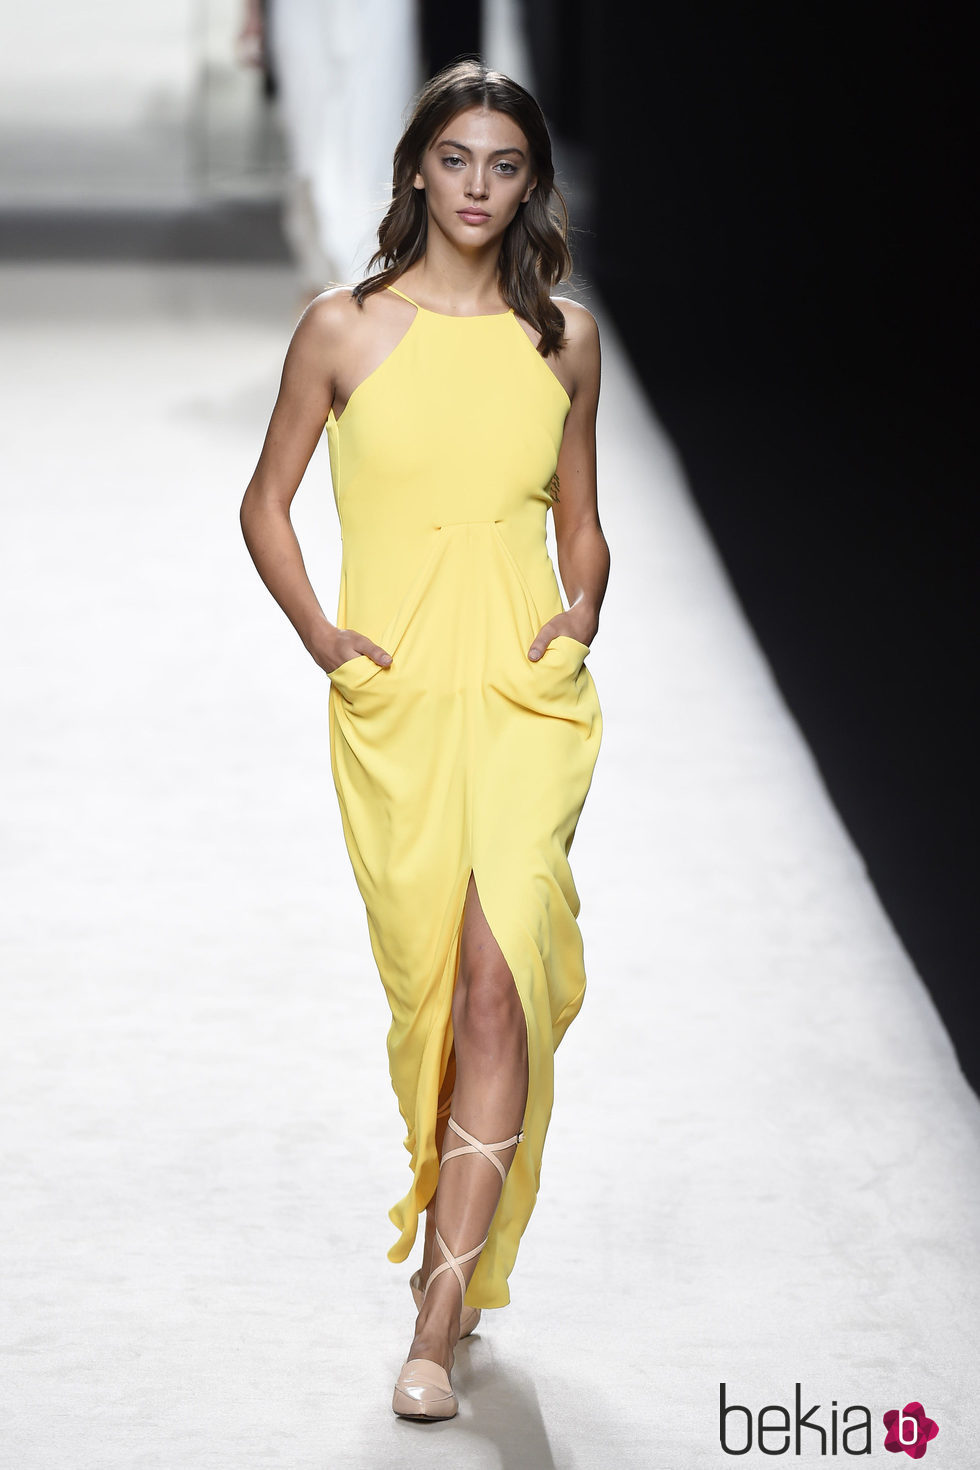 Vestido amarillo de Juanjo Oliva para primavera/verano 2015 en Madrid Fashion Week